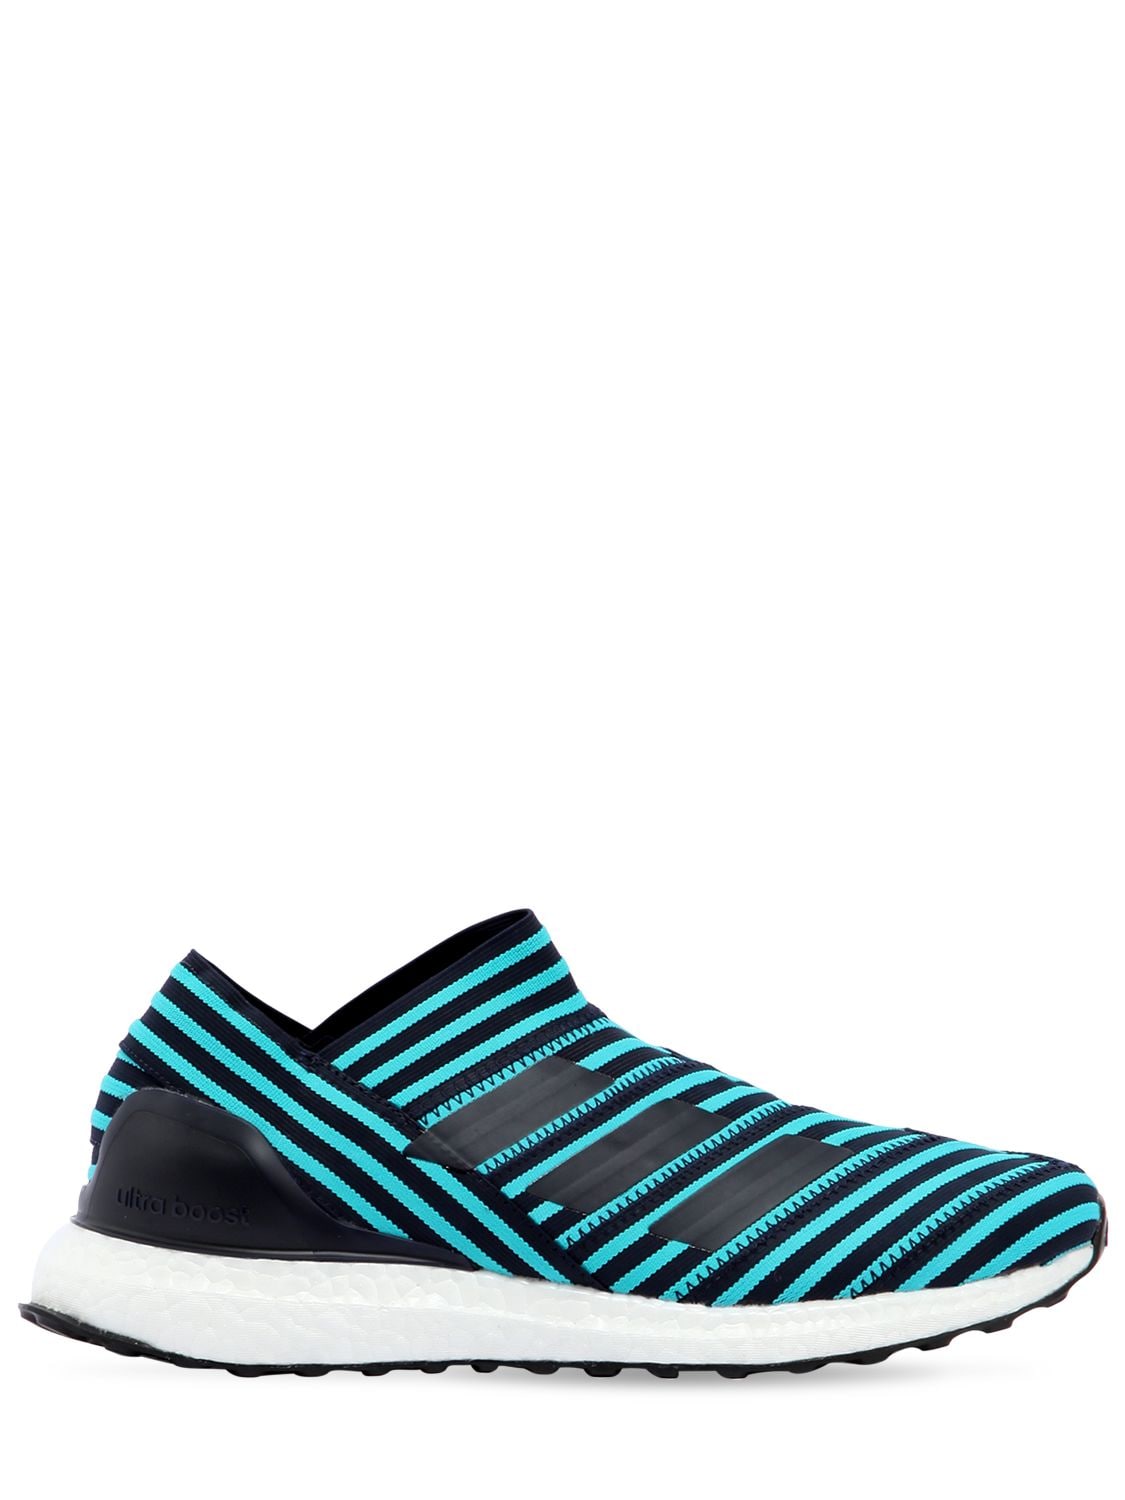 Adidas X Nemeziz Nemeziz Tango 17+ 360 Agility Sneakers In Blue